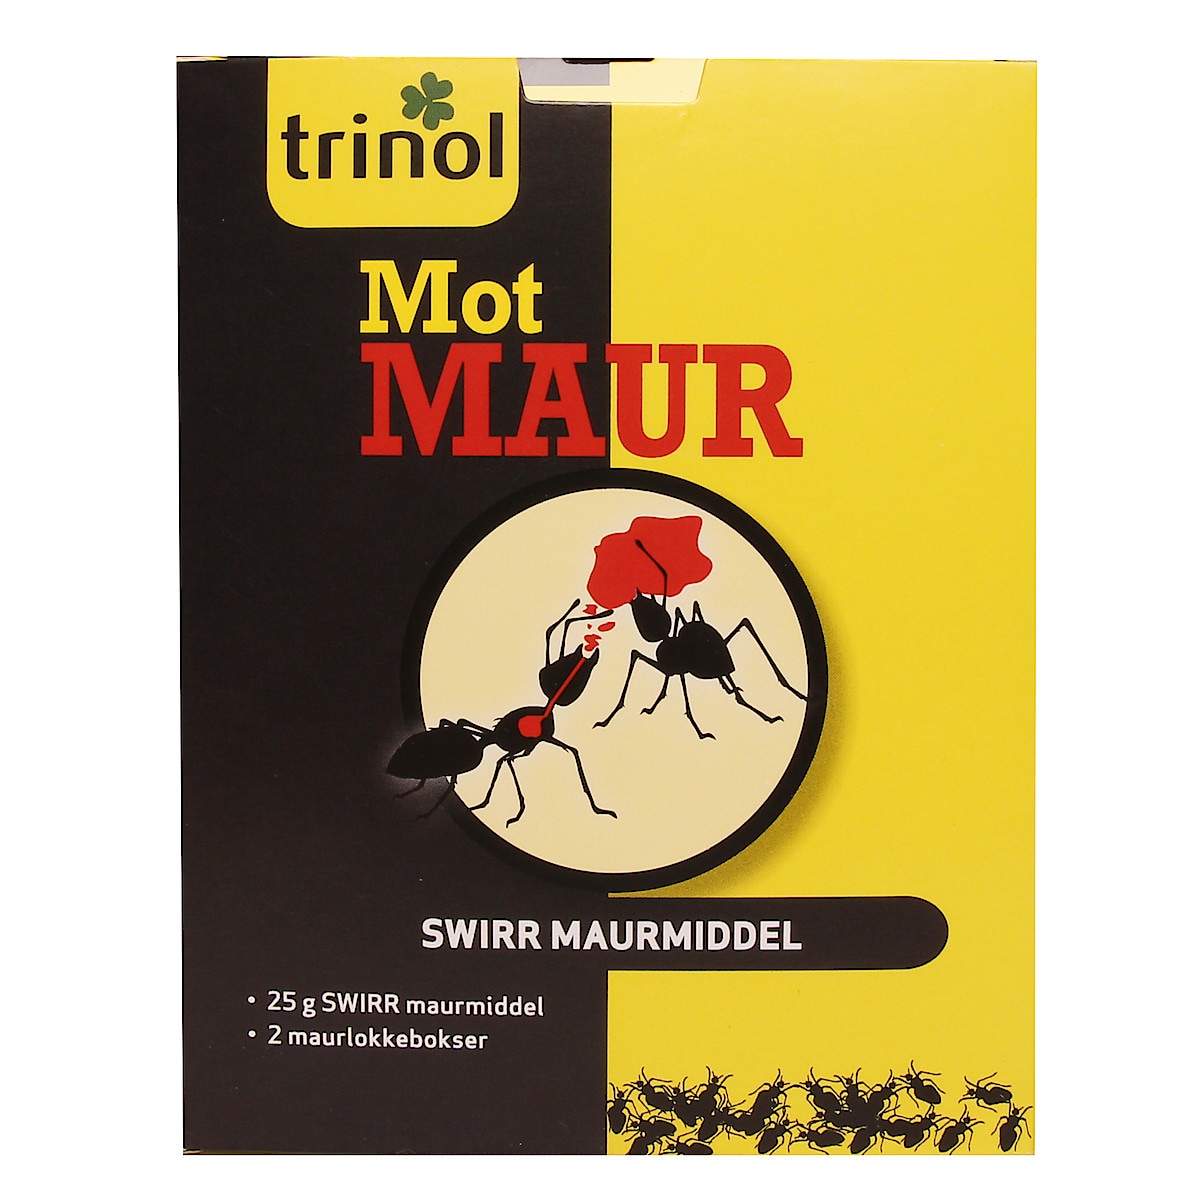 Trinol, Swirr maurmiddel-kit